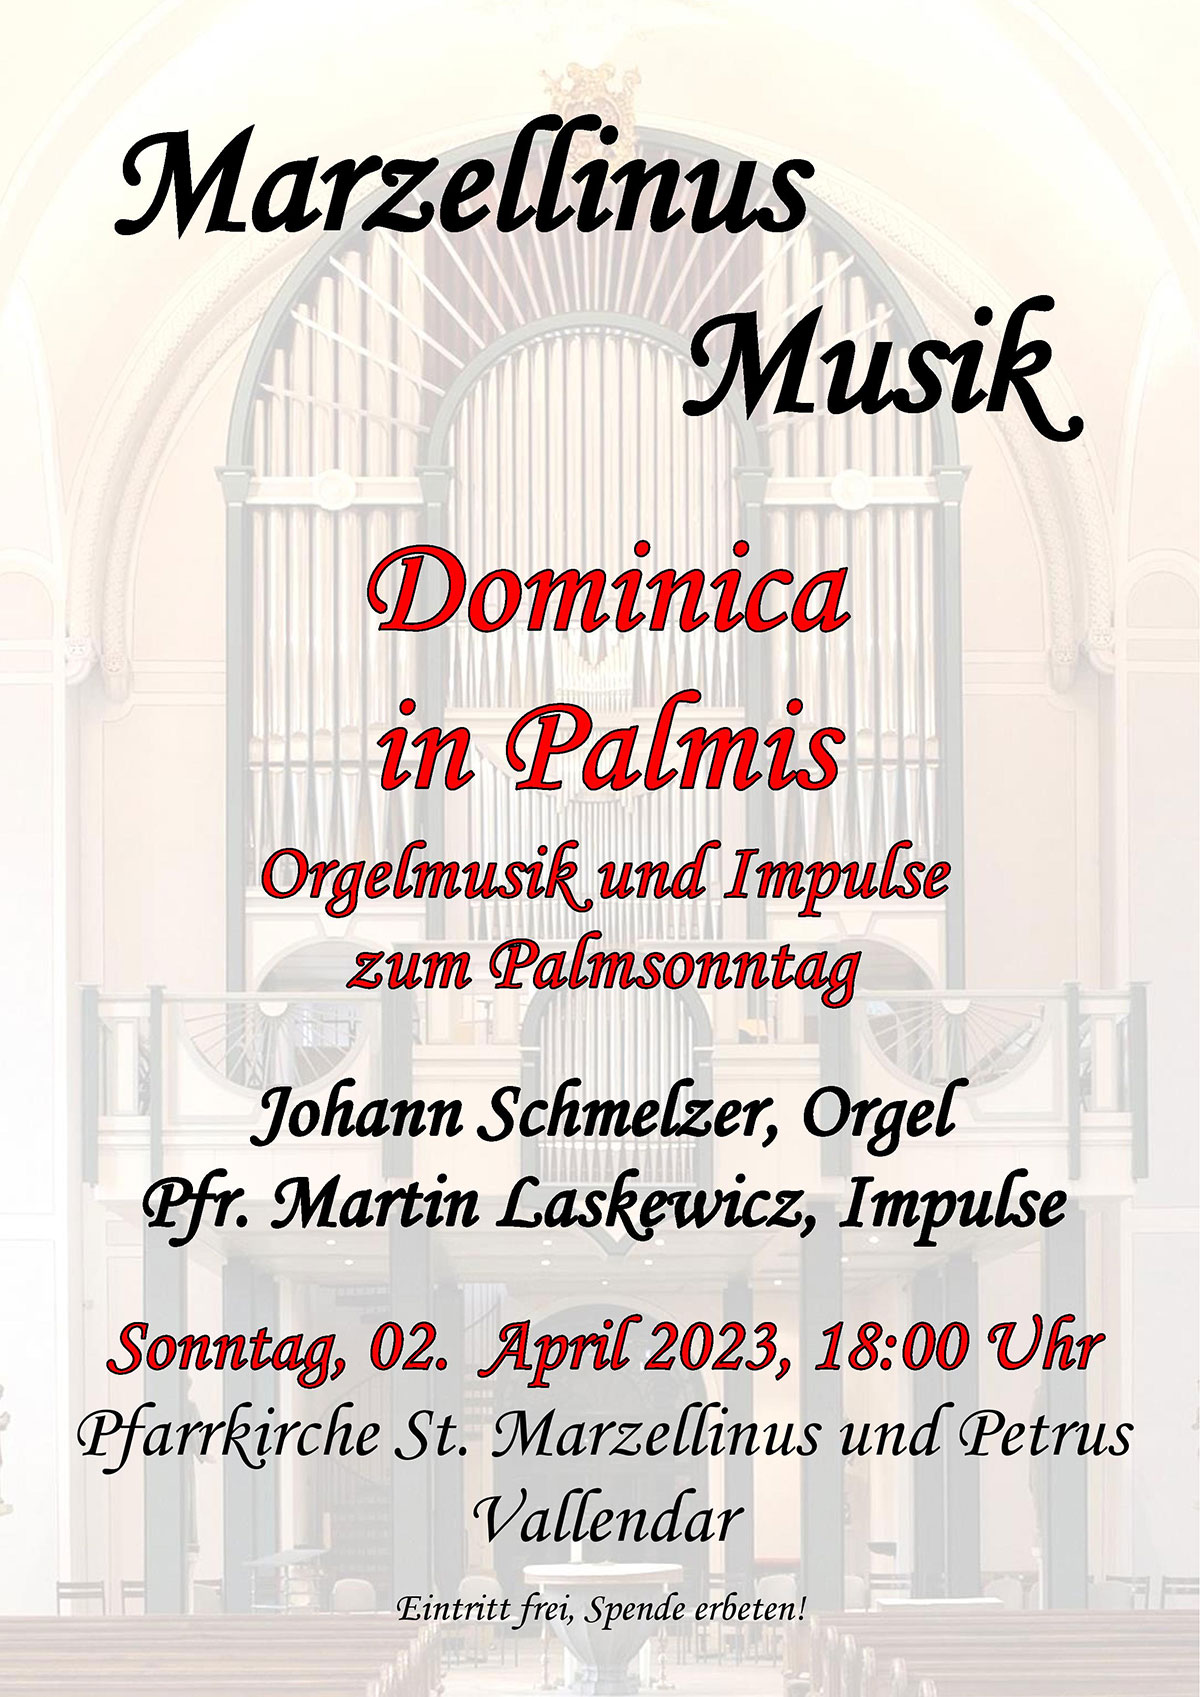 Marzellinus Musik "Dominica in Palmis" - Plakat (Foto: Pfarrei Vallendar)